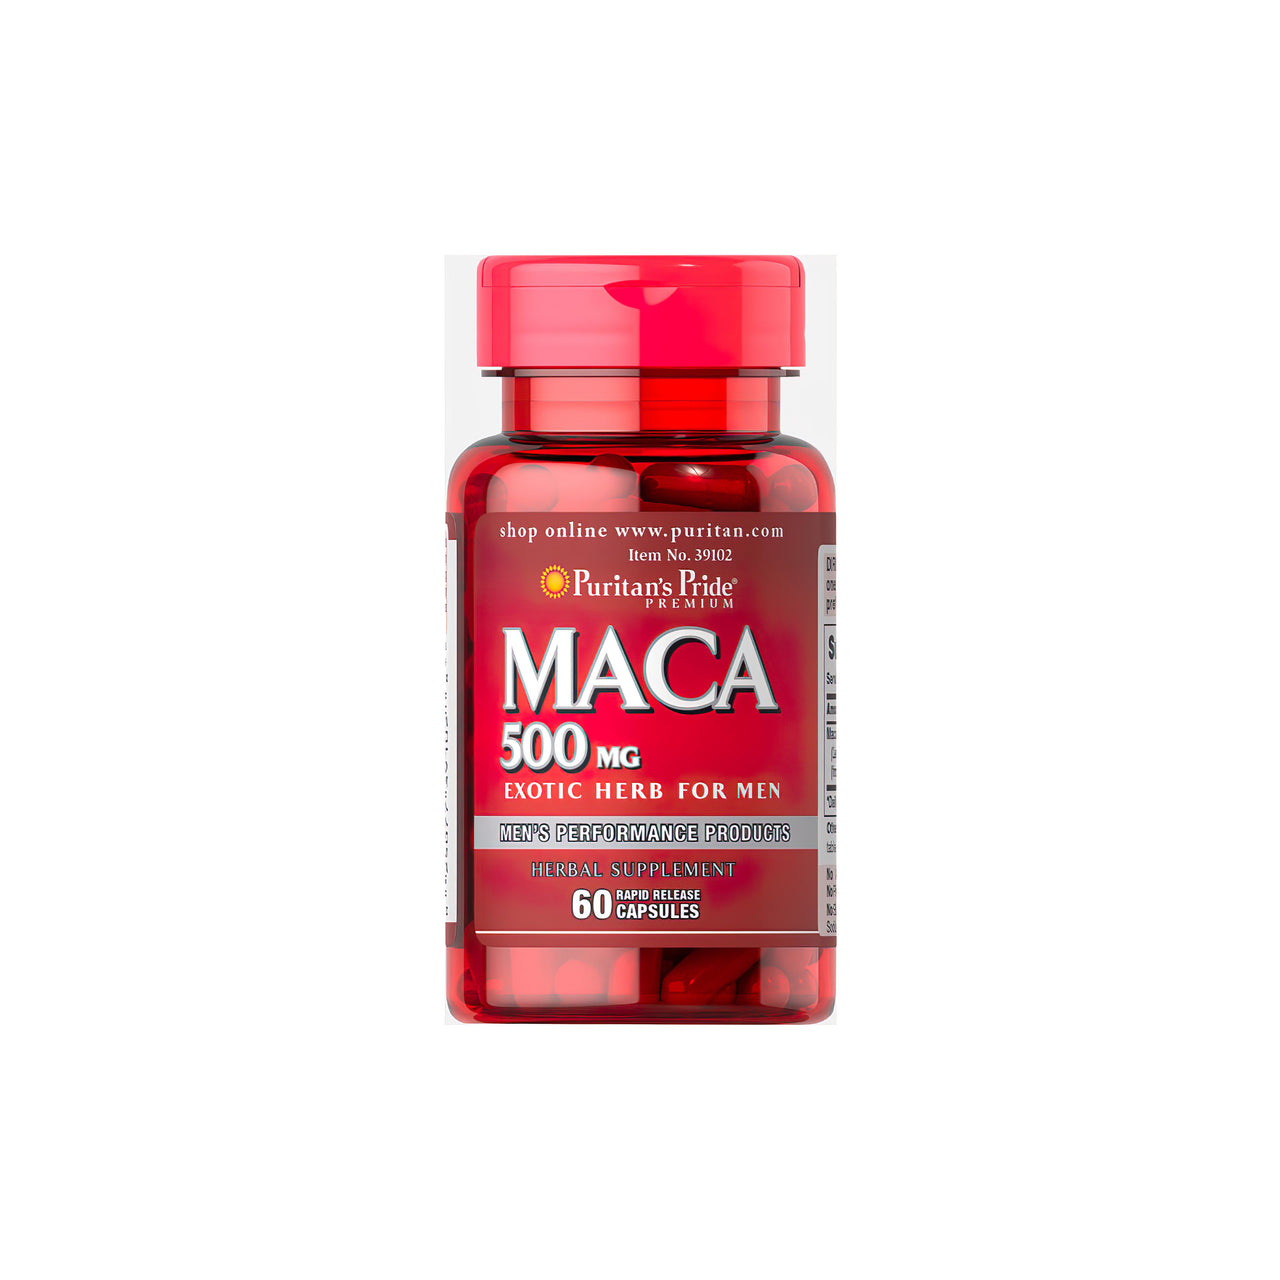 A bottle of Puritan's Pride Maca 500 mg 60 Rapid Release Capsules.